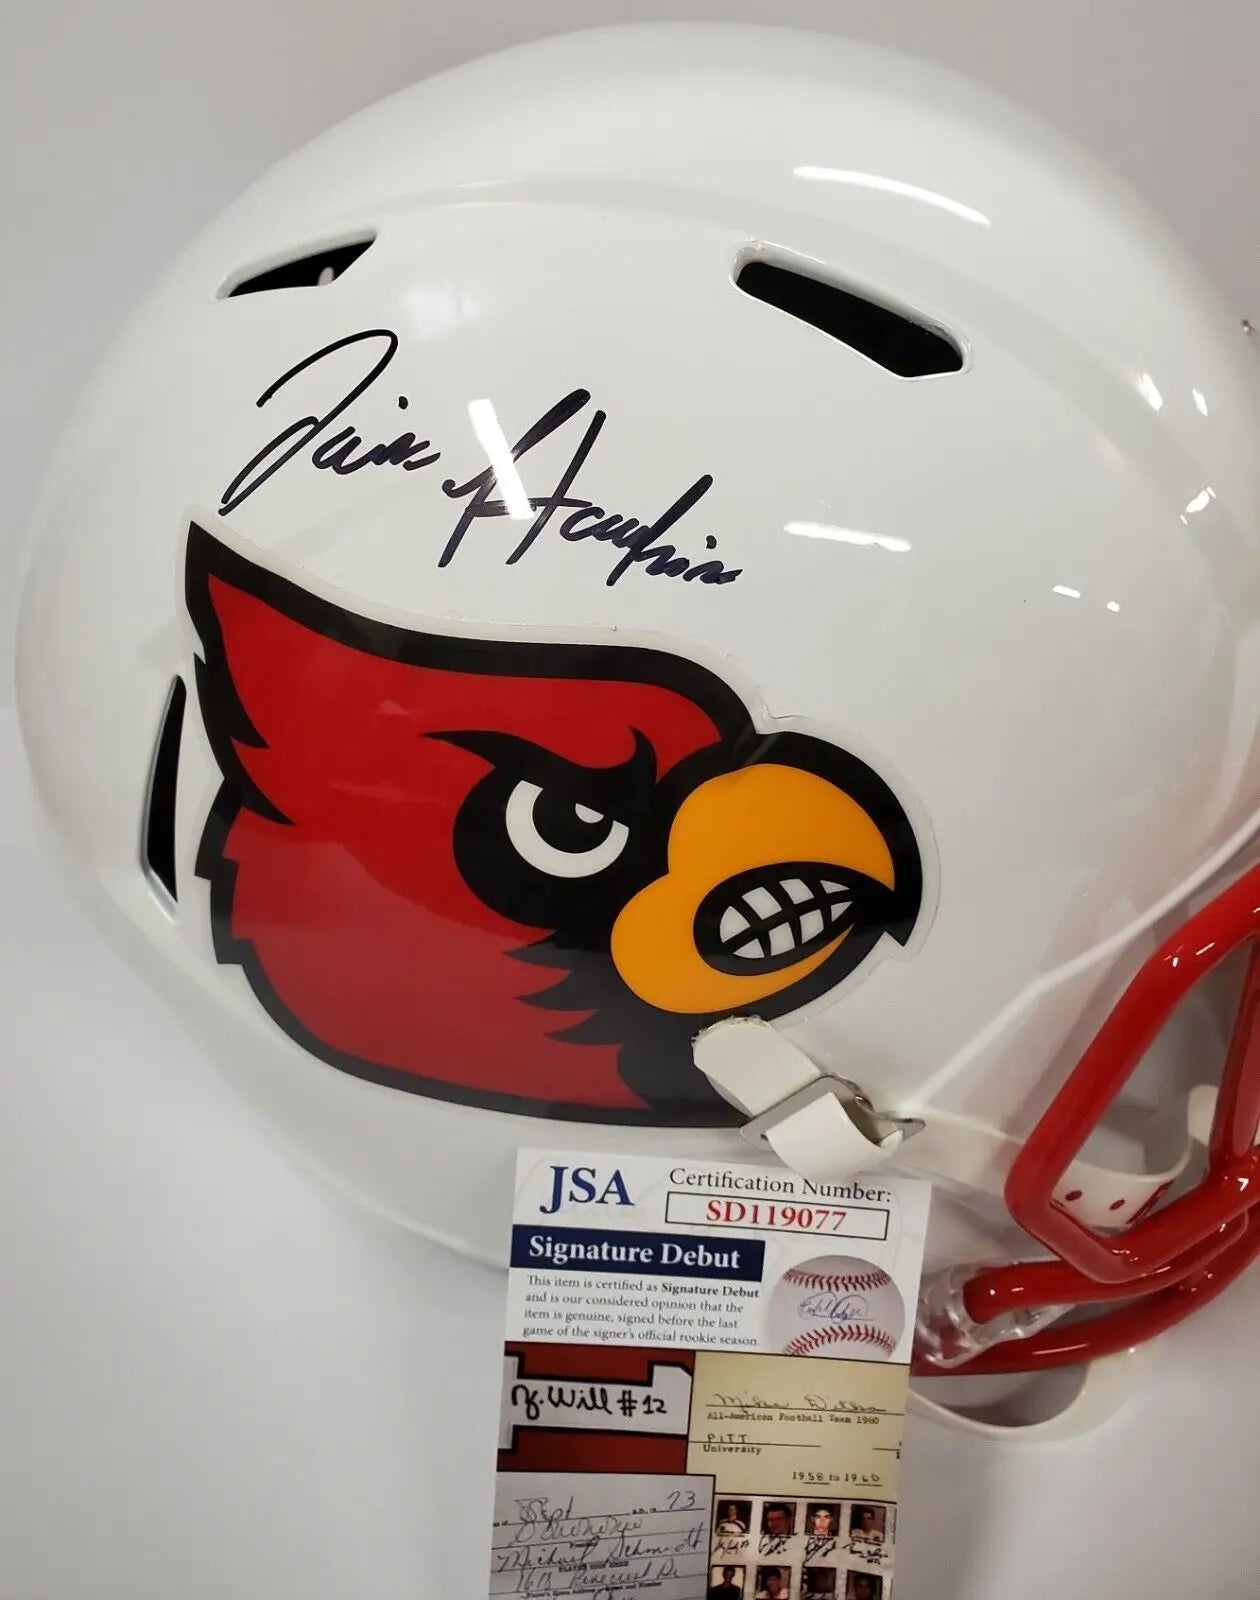 MVP Authentics Javian Hawkins Signed Louisville Cardinals Replica Full Sz Speed Helmet Jsa Coa 224.10 sports jersey framing , jersey framing